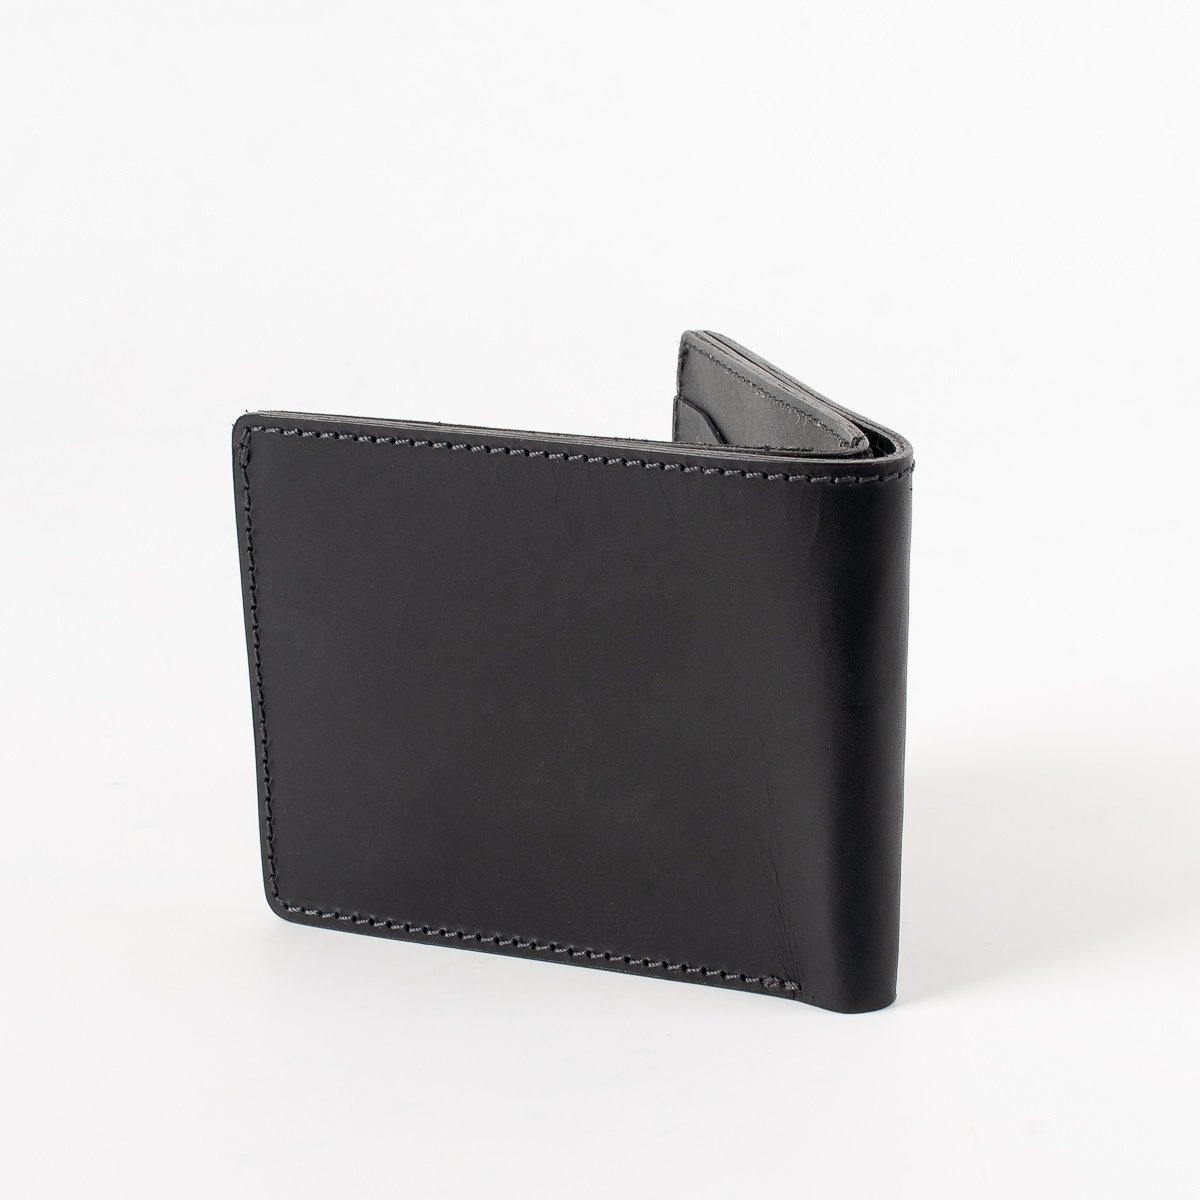 OGL-KINGSMAN-BF OGL Kingsman Classic Bi Fold Wallet - Black, Brown or Tan - 7